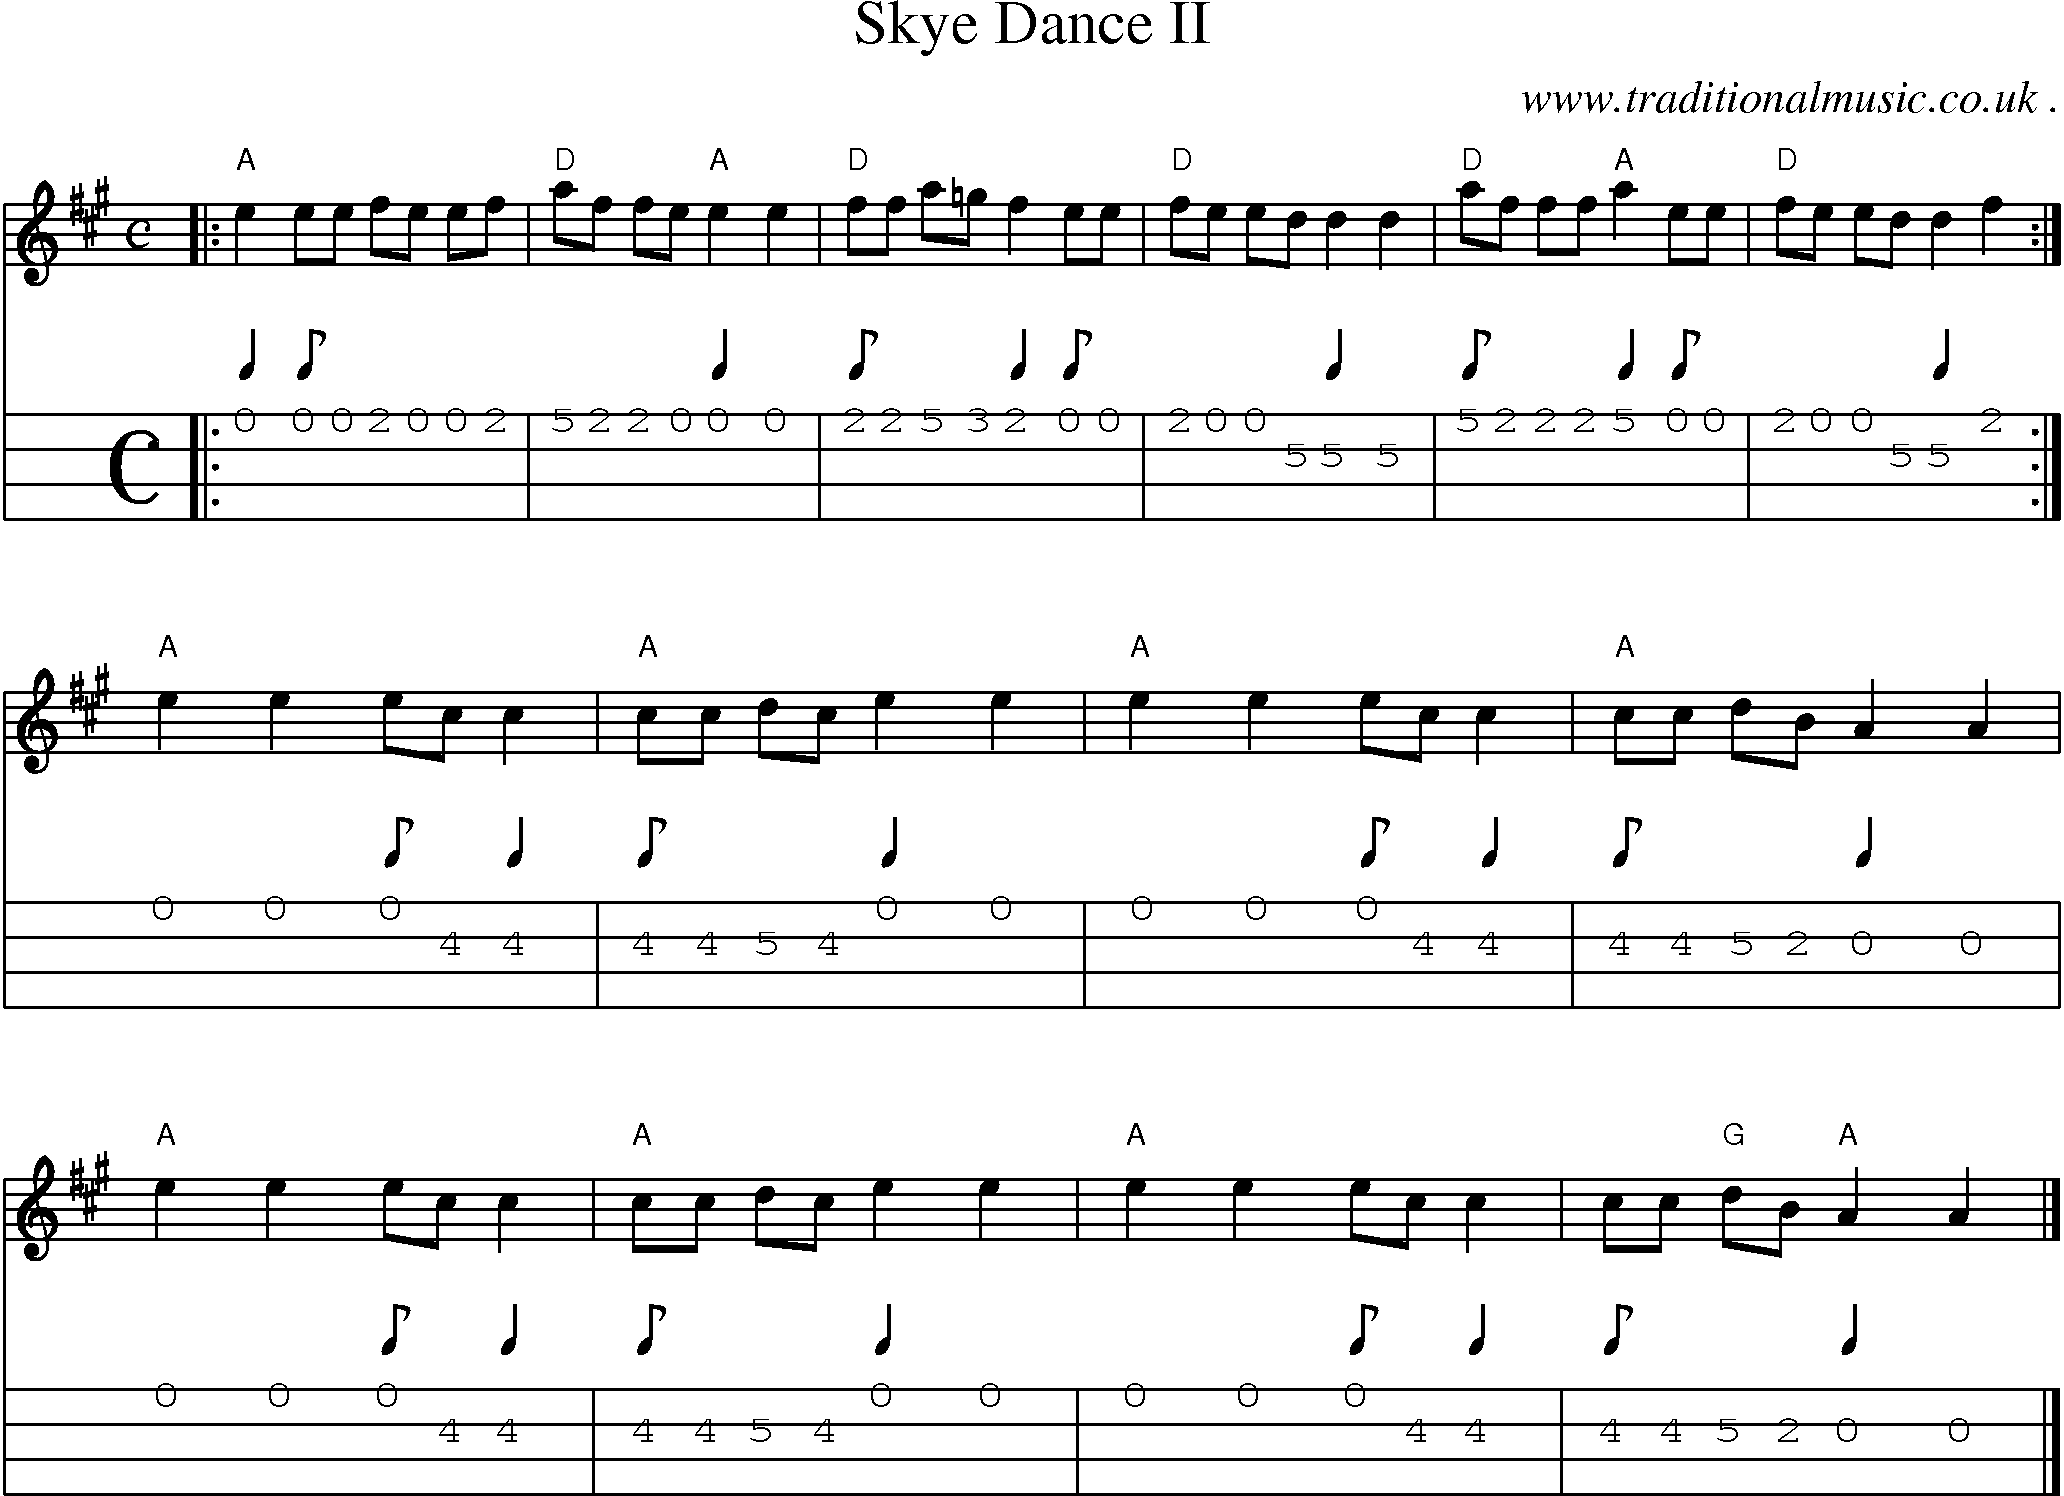 Sheet-music  score, Chords and Mandolin Tabs for Skye Dance Ii